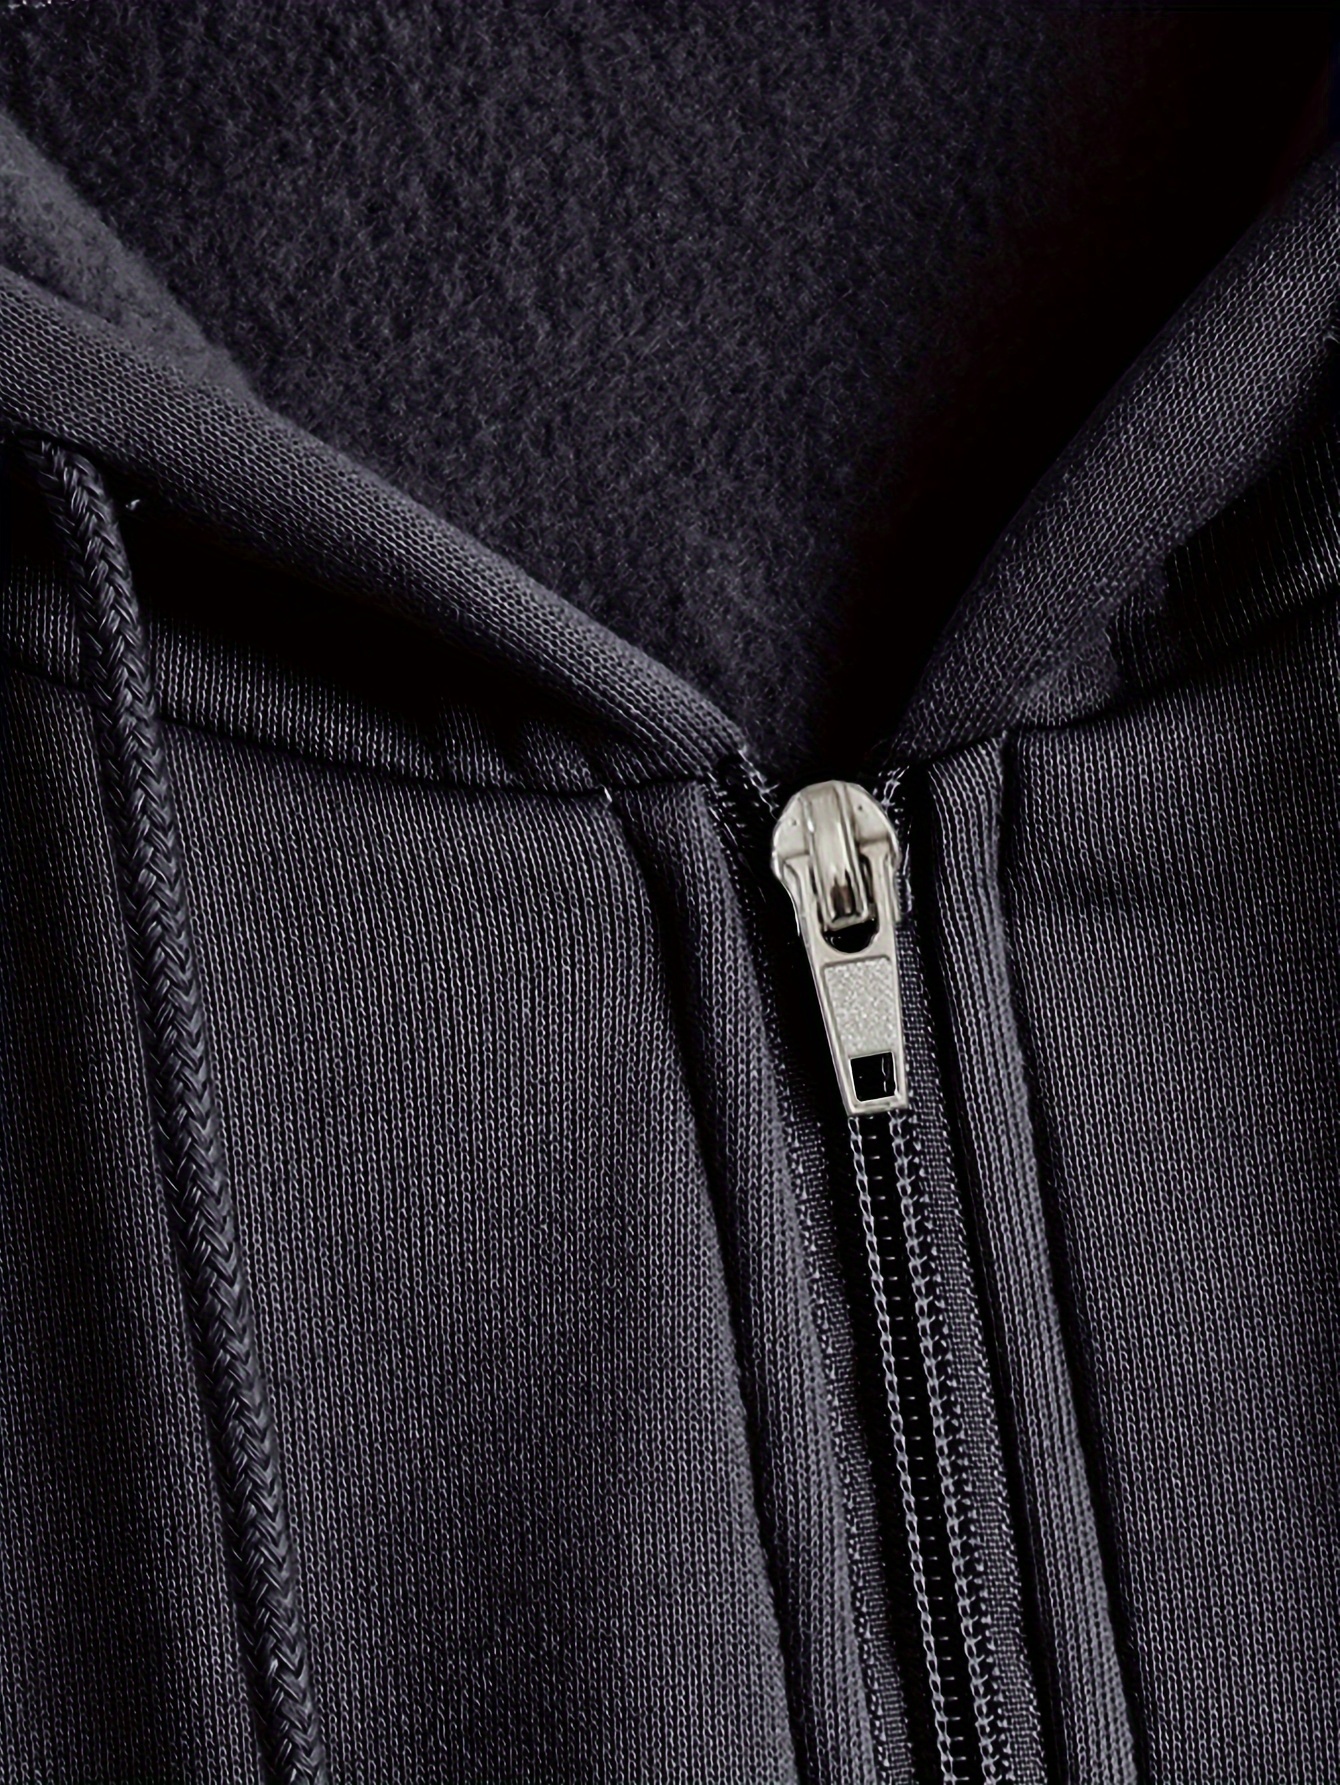  PRDECE Sweatshirt for Women Zipper Drawstring Thermal